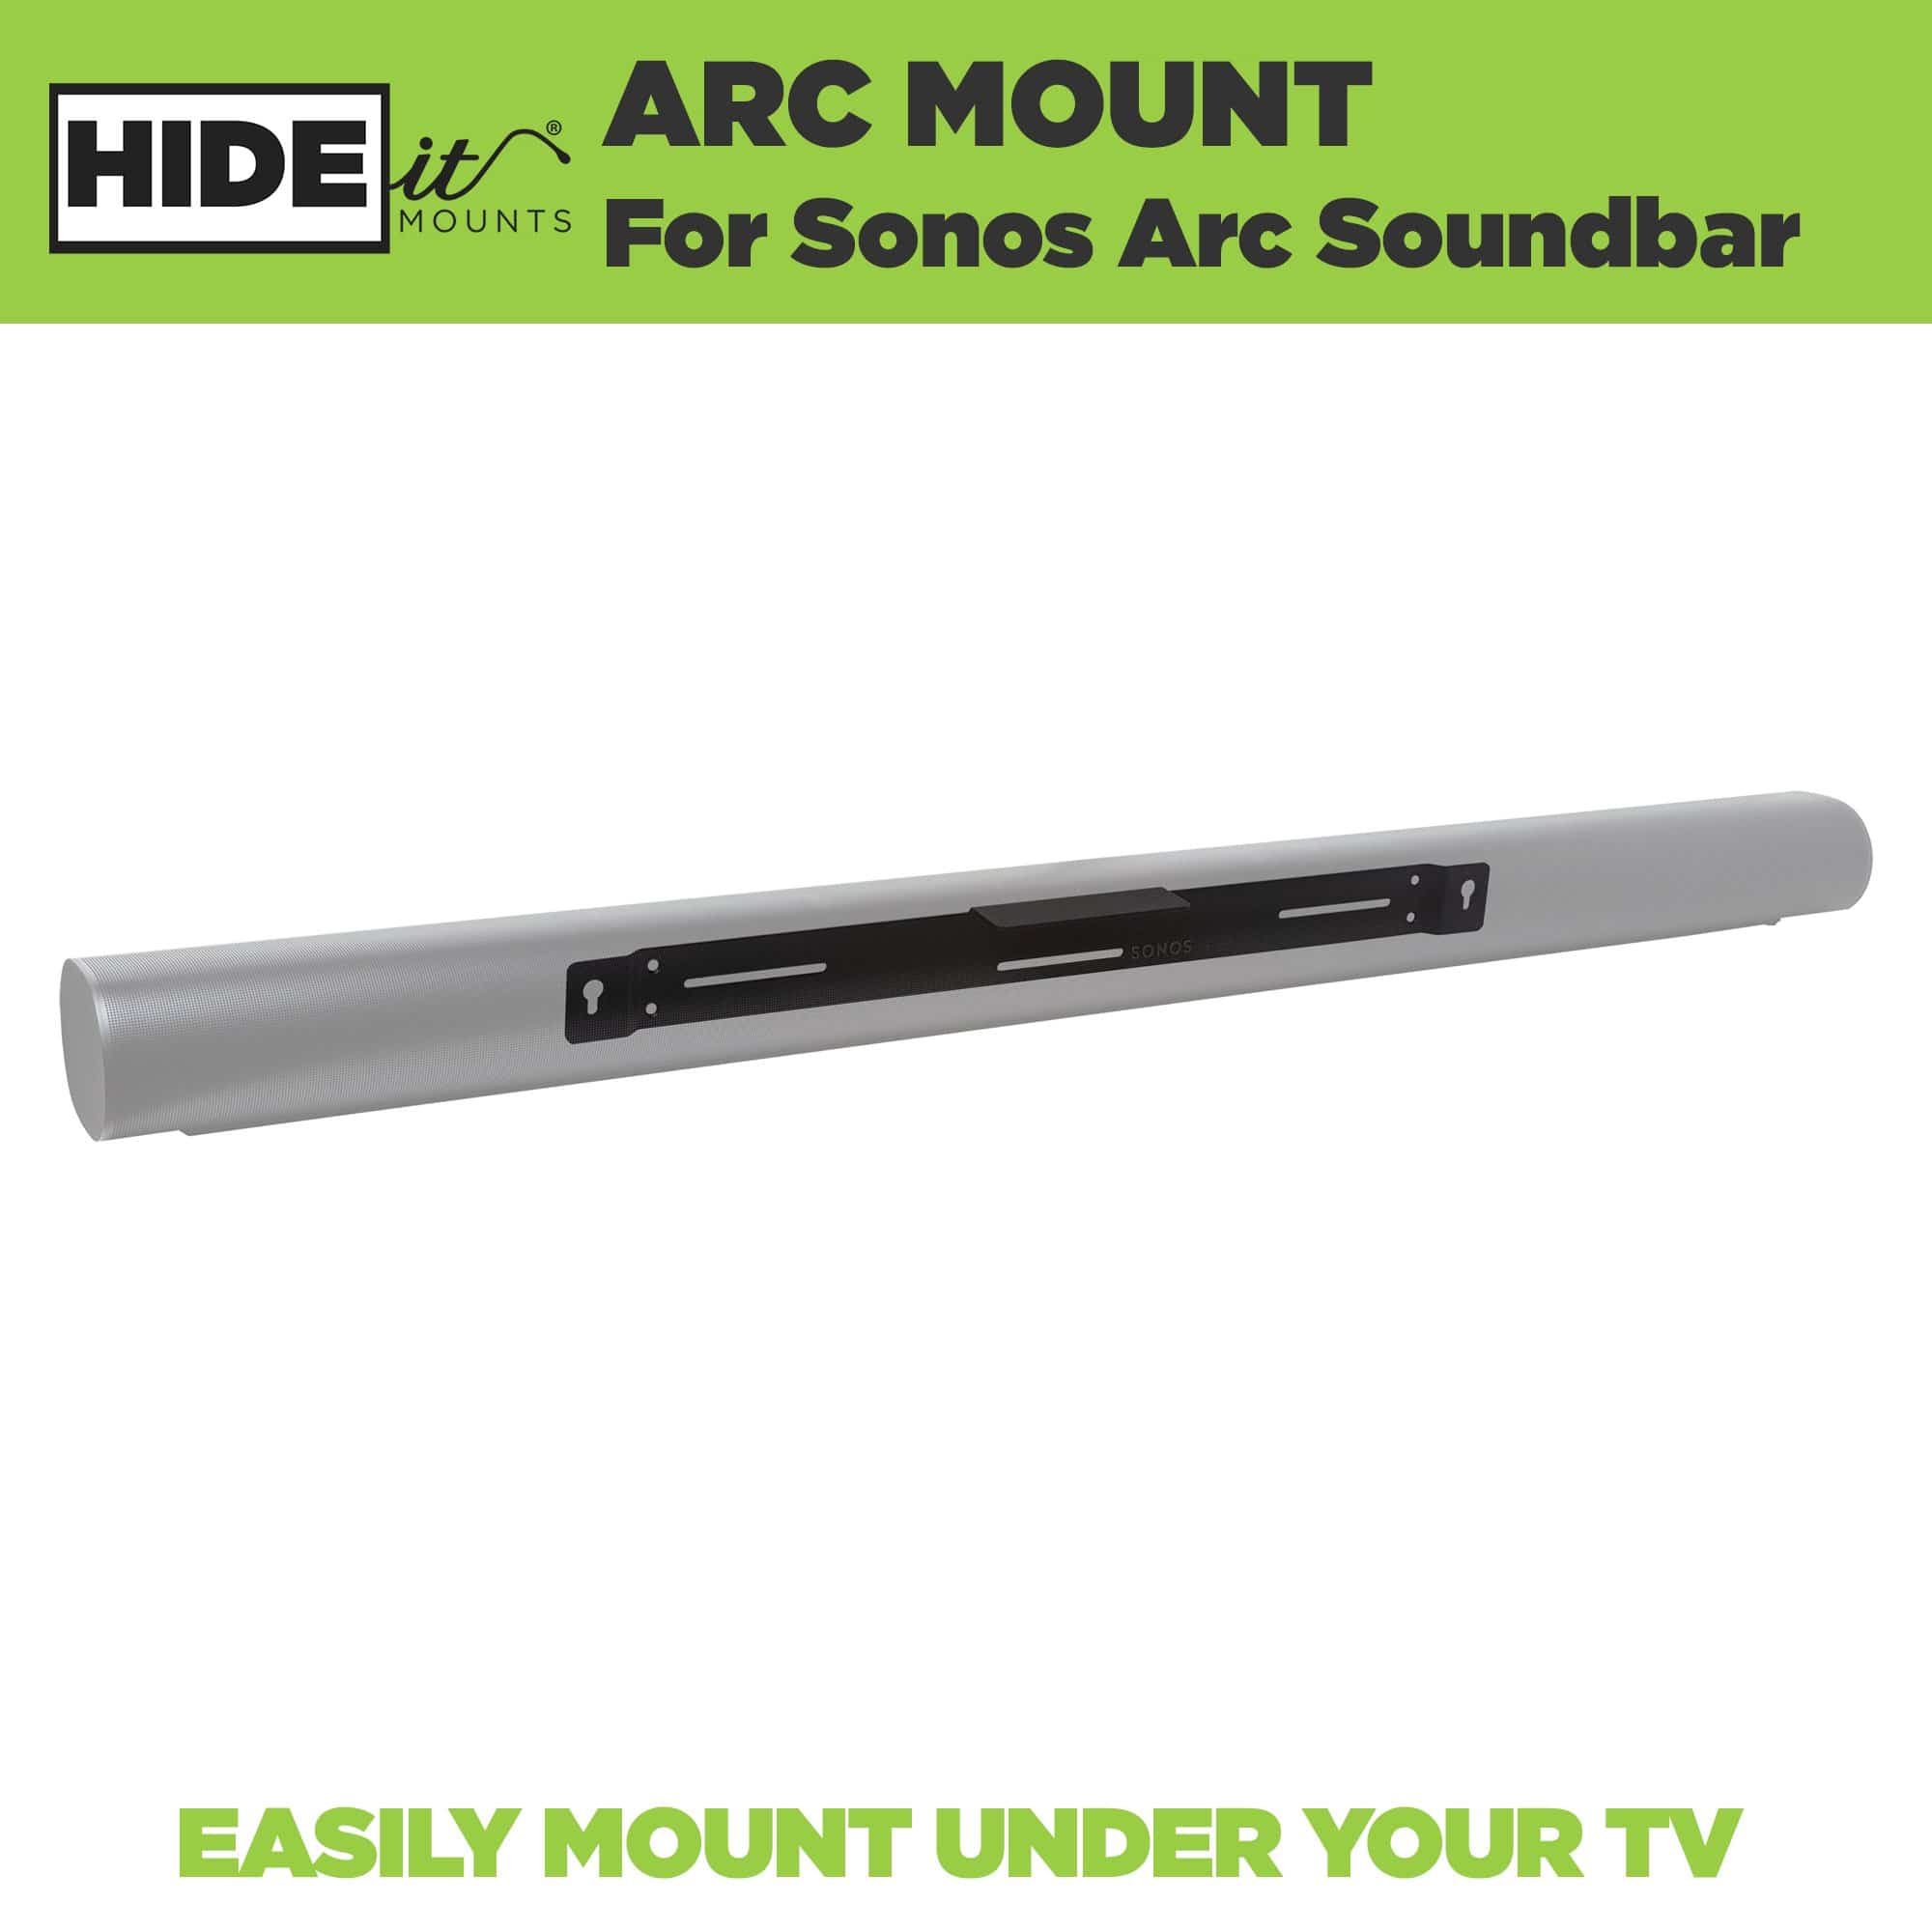 Greyed out Sonos Arc mounted on a steel HIDEit Mount, designed for the Sonos Arc Soundbar.